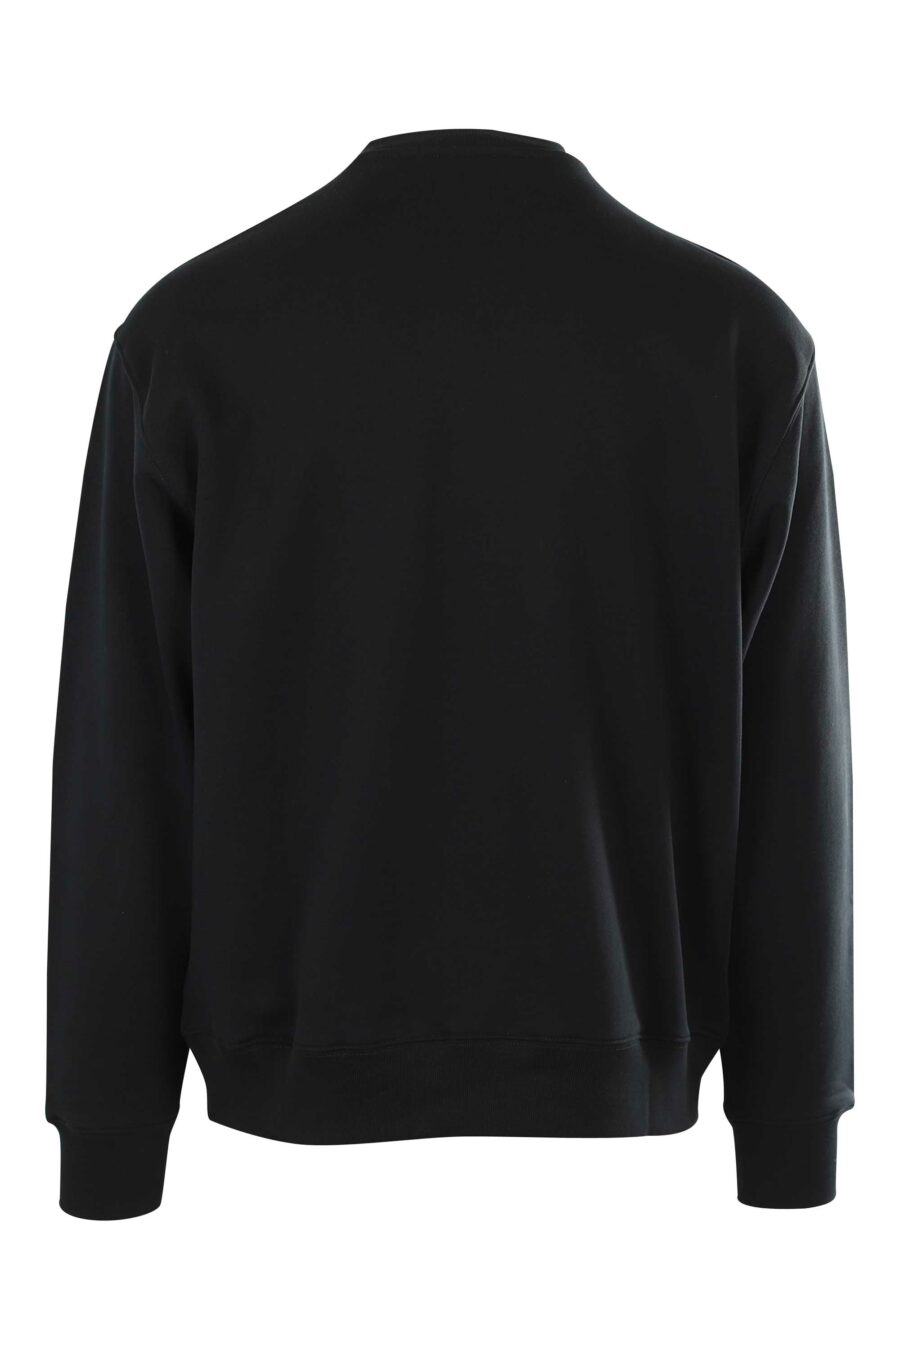 Schwarzes Sweatshirt mit silbernem Eifer-Effekt-Logo - 889316179569 3